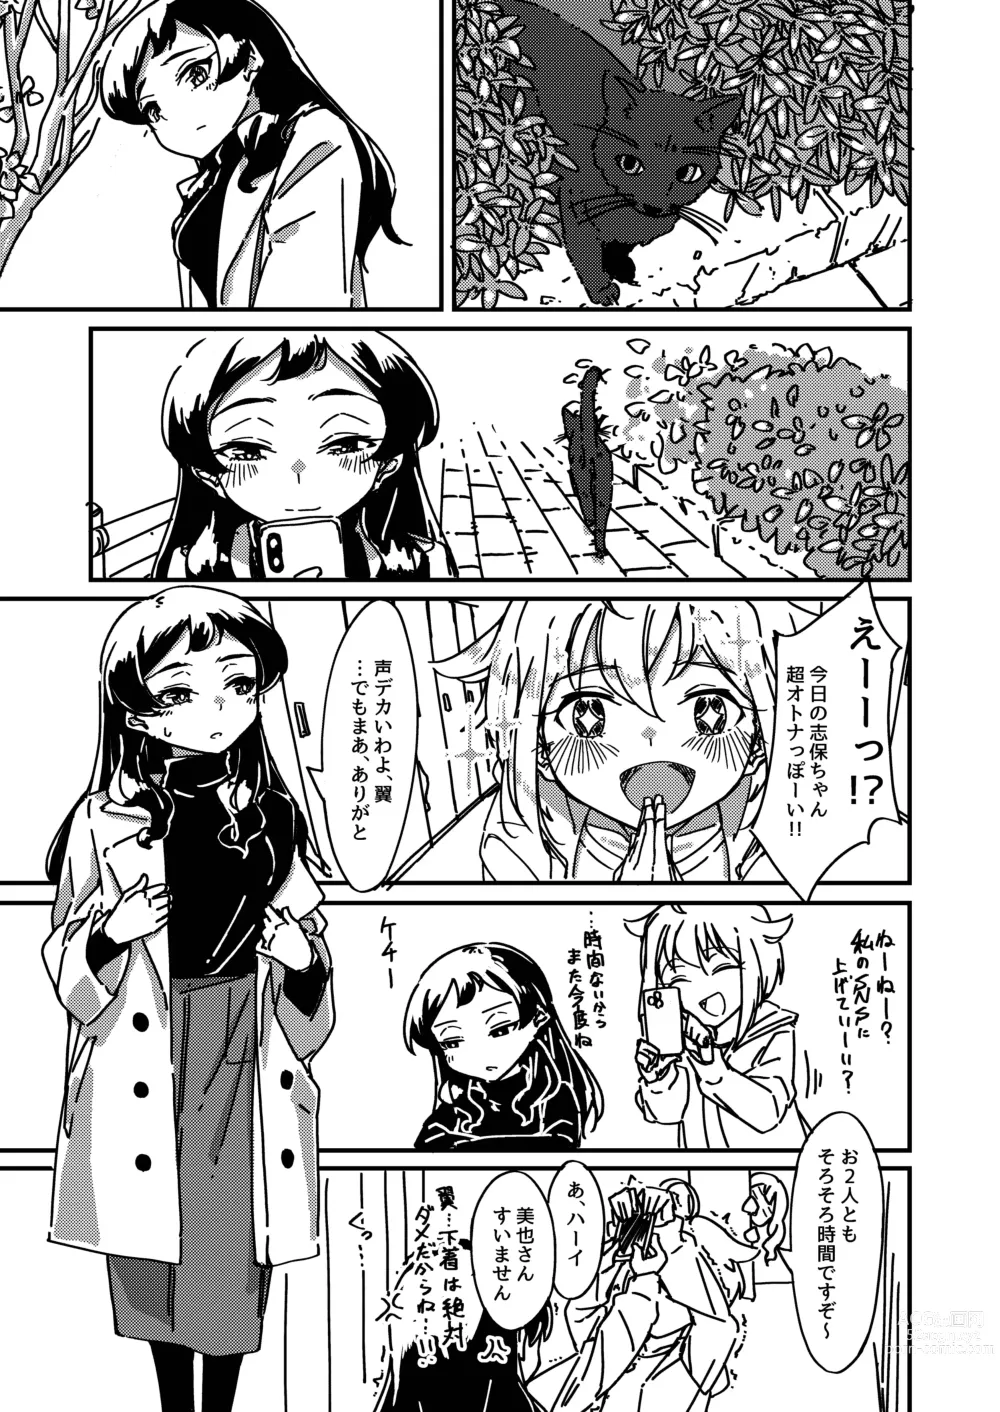 Page 6 of doujinshi Kuroneko no Kyouji + Aruhi no Kuro Usagi